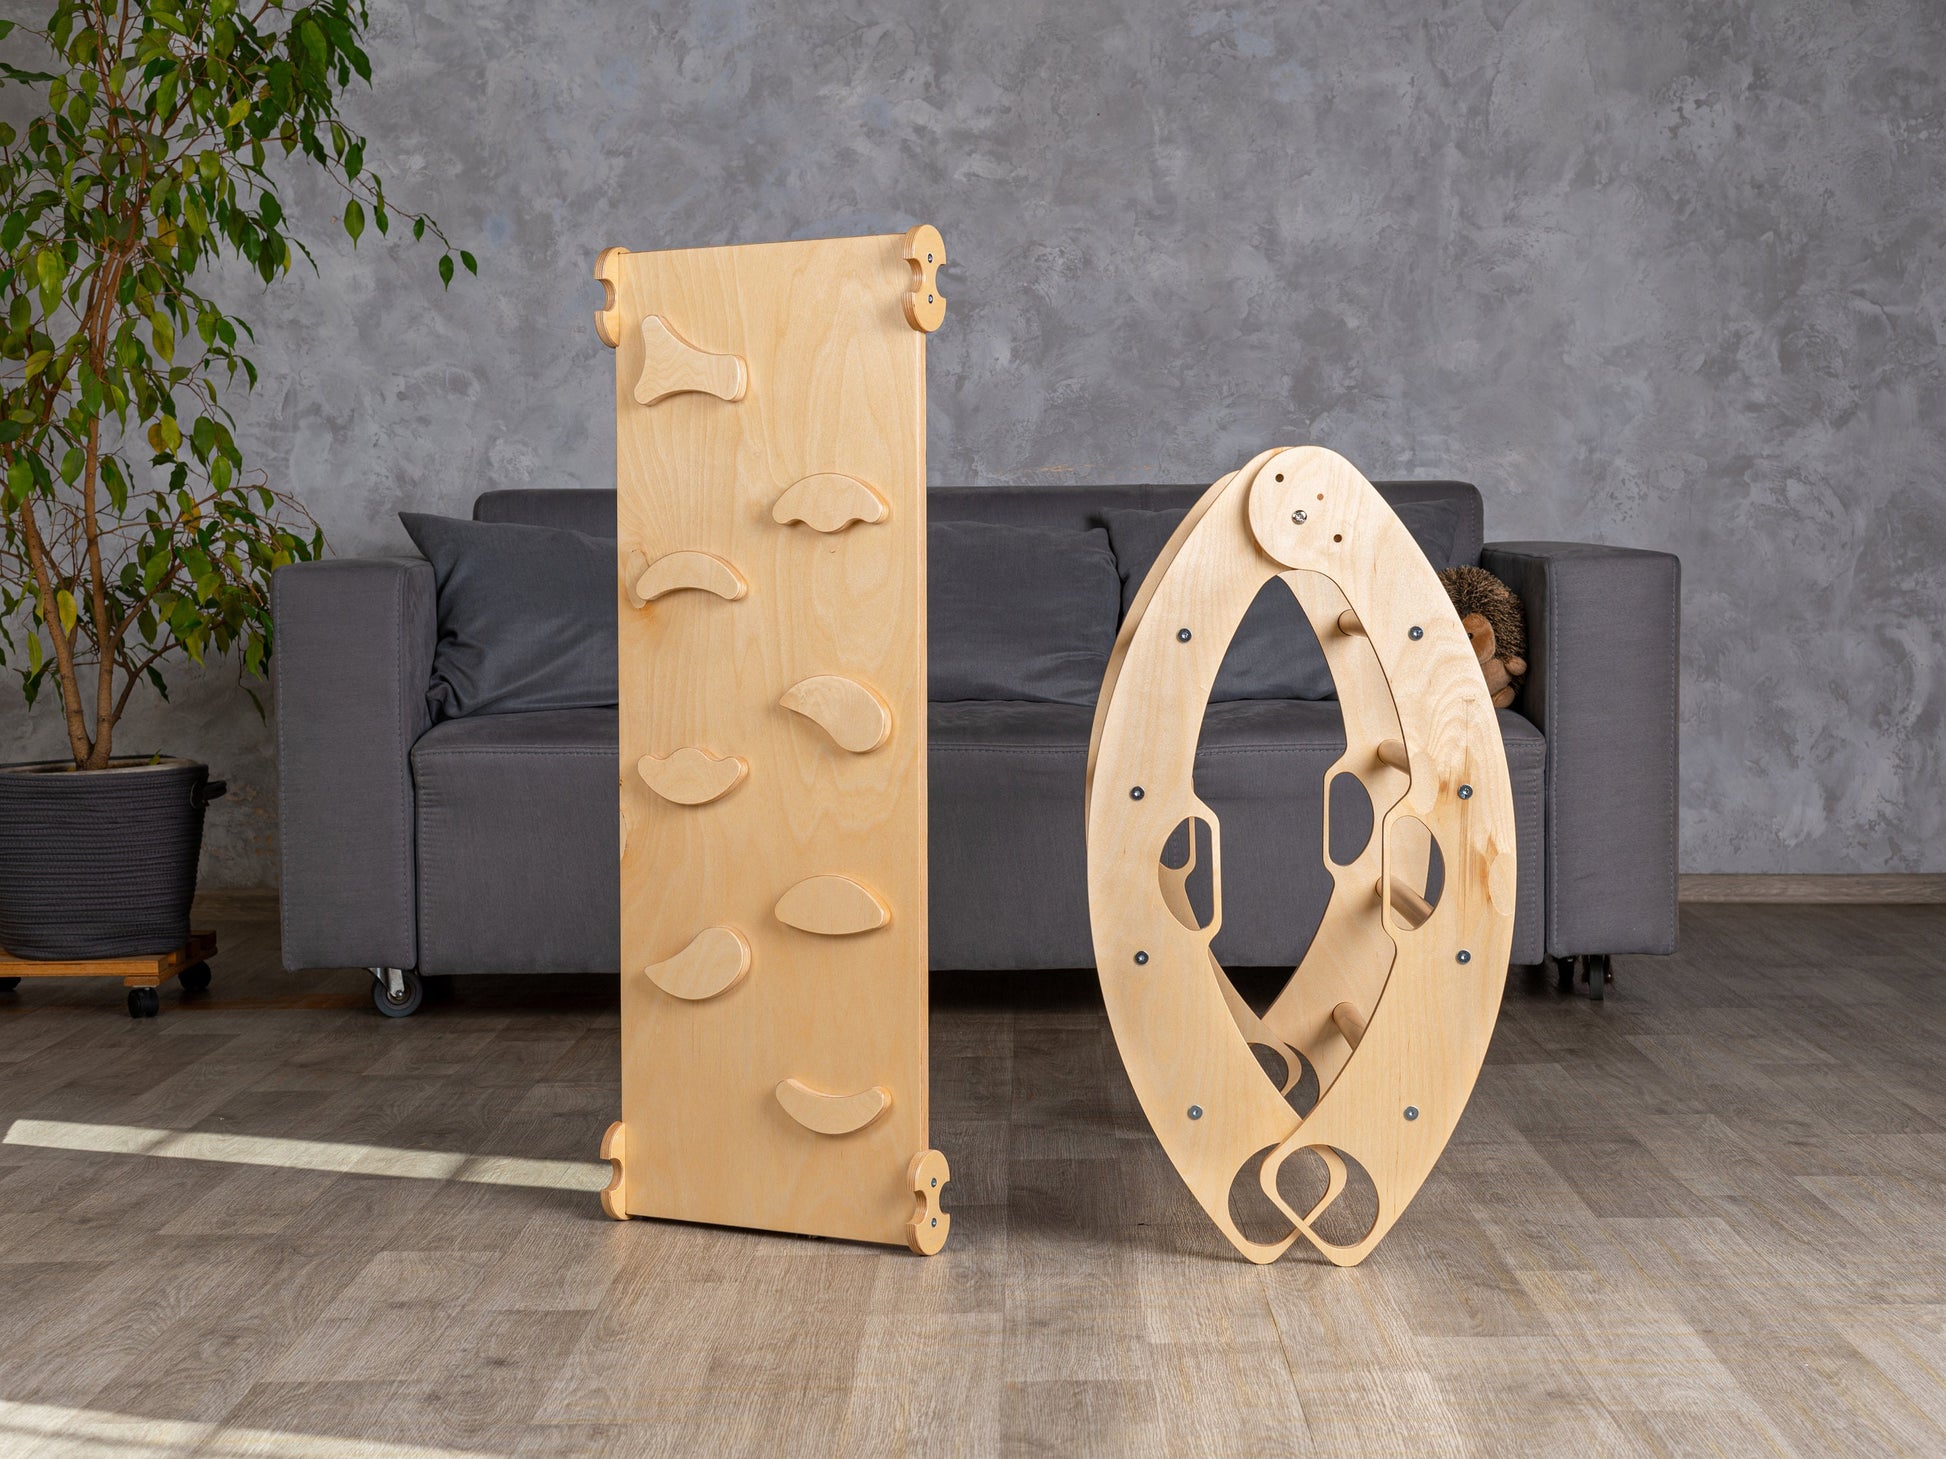 Large Climbing Foldable Arch with Pillow, montessori сlimbing set